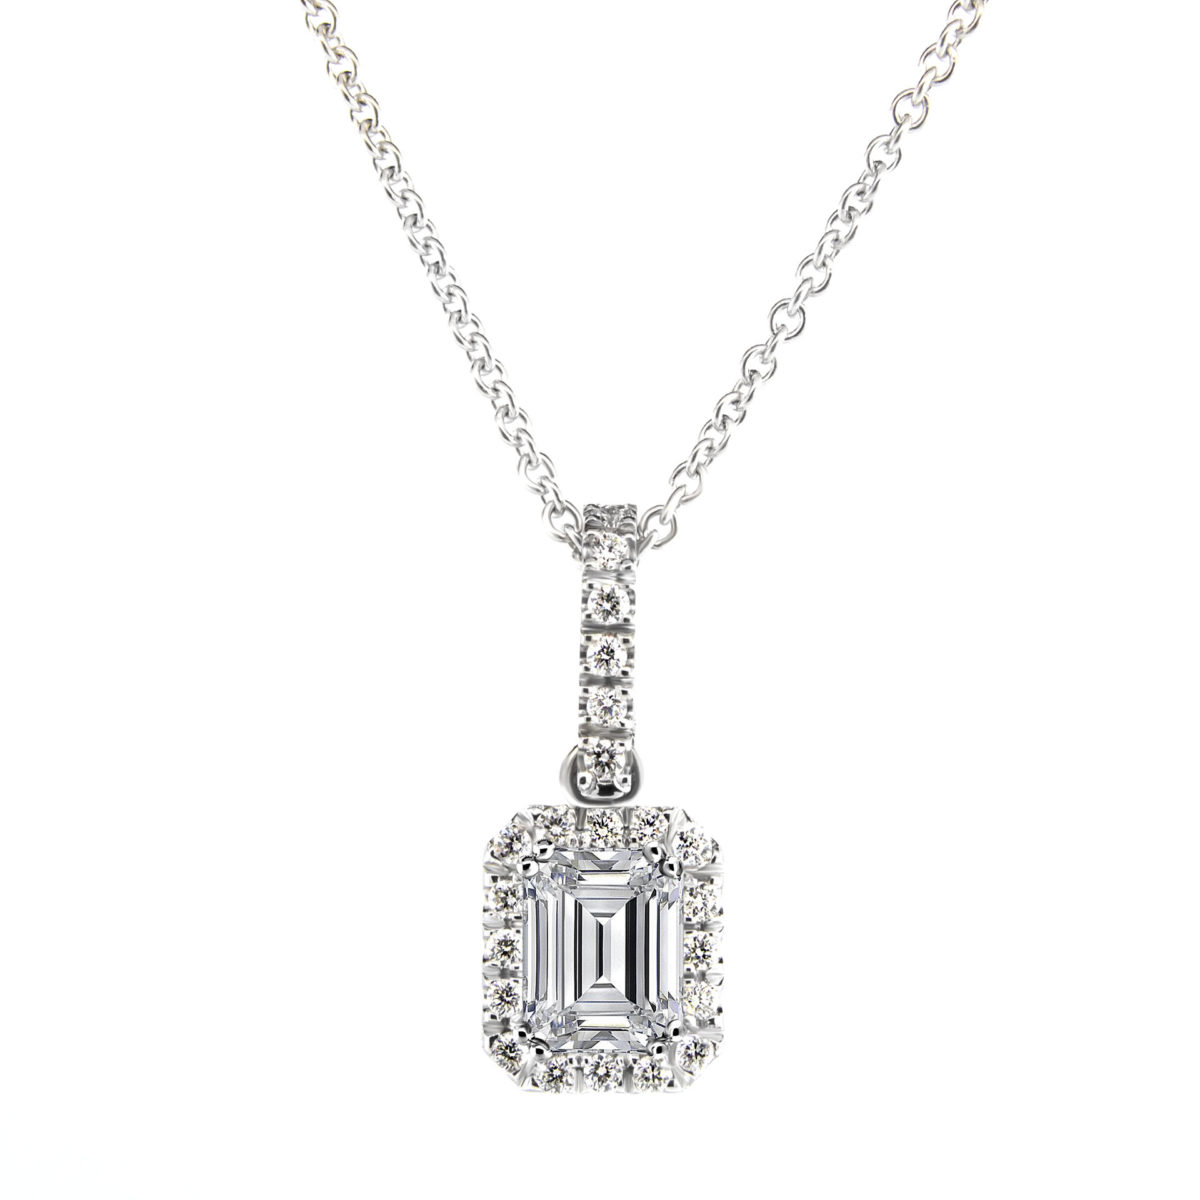 Double Prong Emerald Cut Halo Diamond Necklace Pendant 1.29 Carats ...